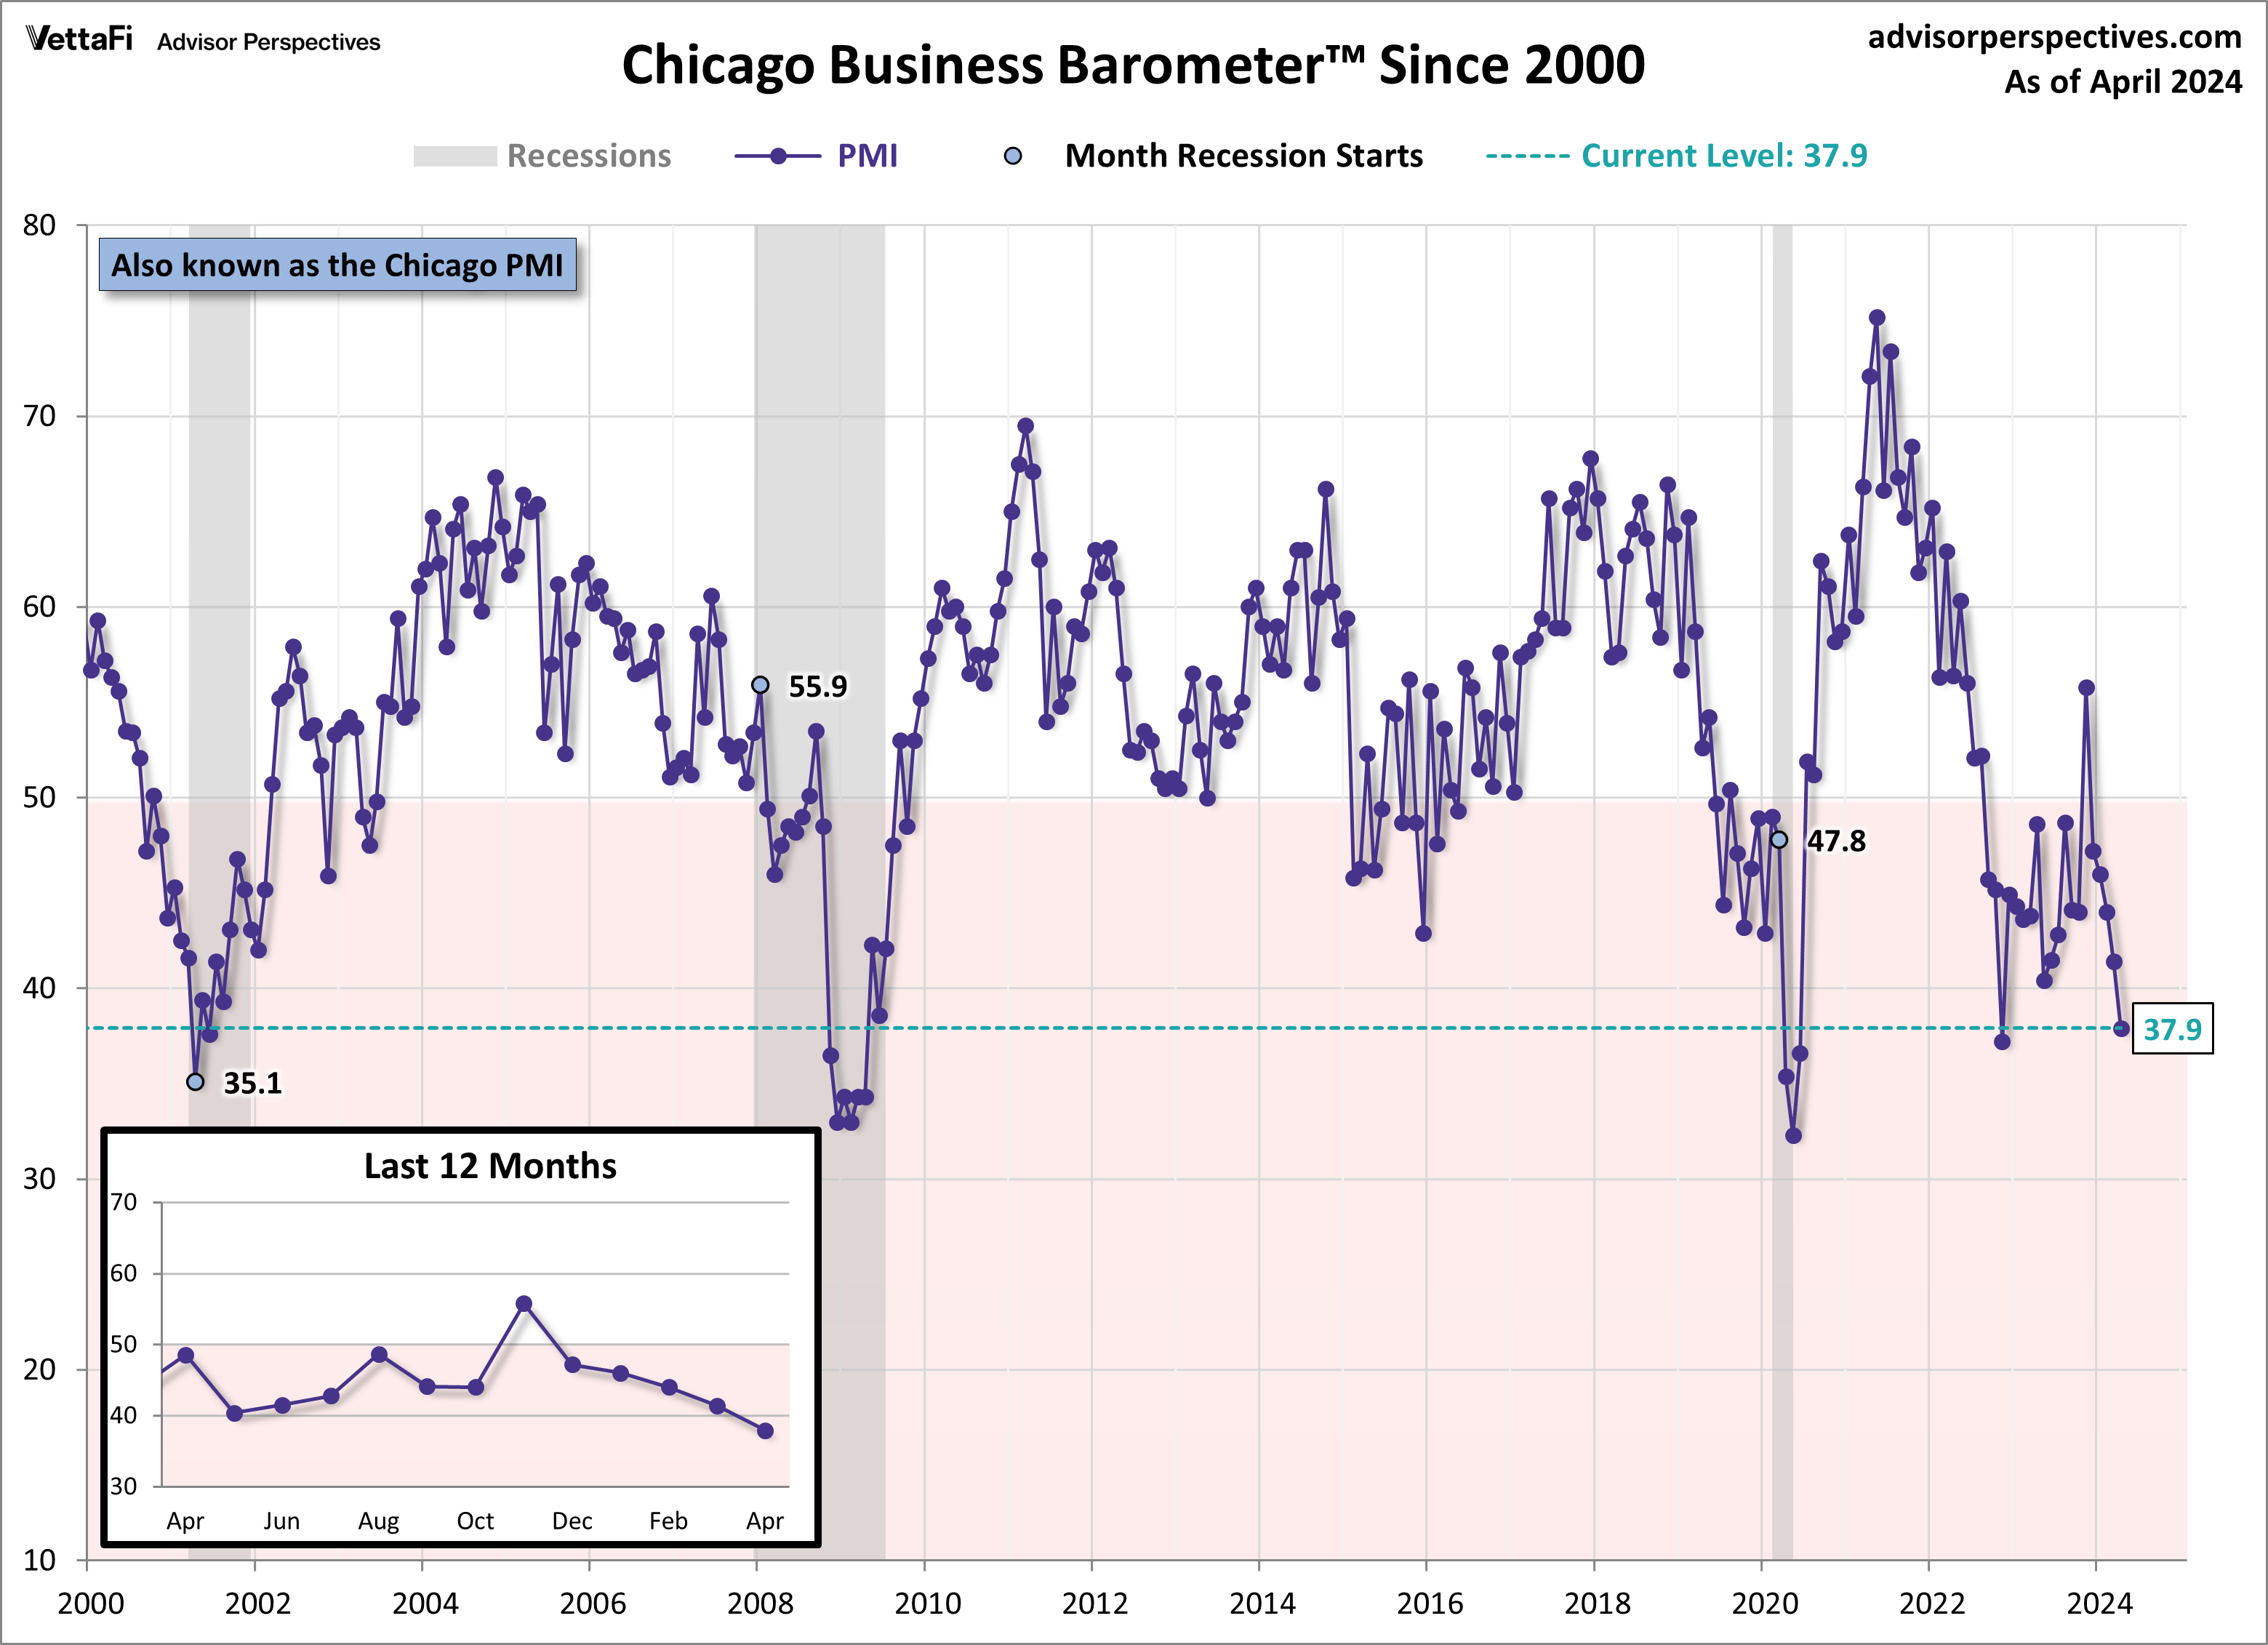 Chicago PMI since 2000